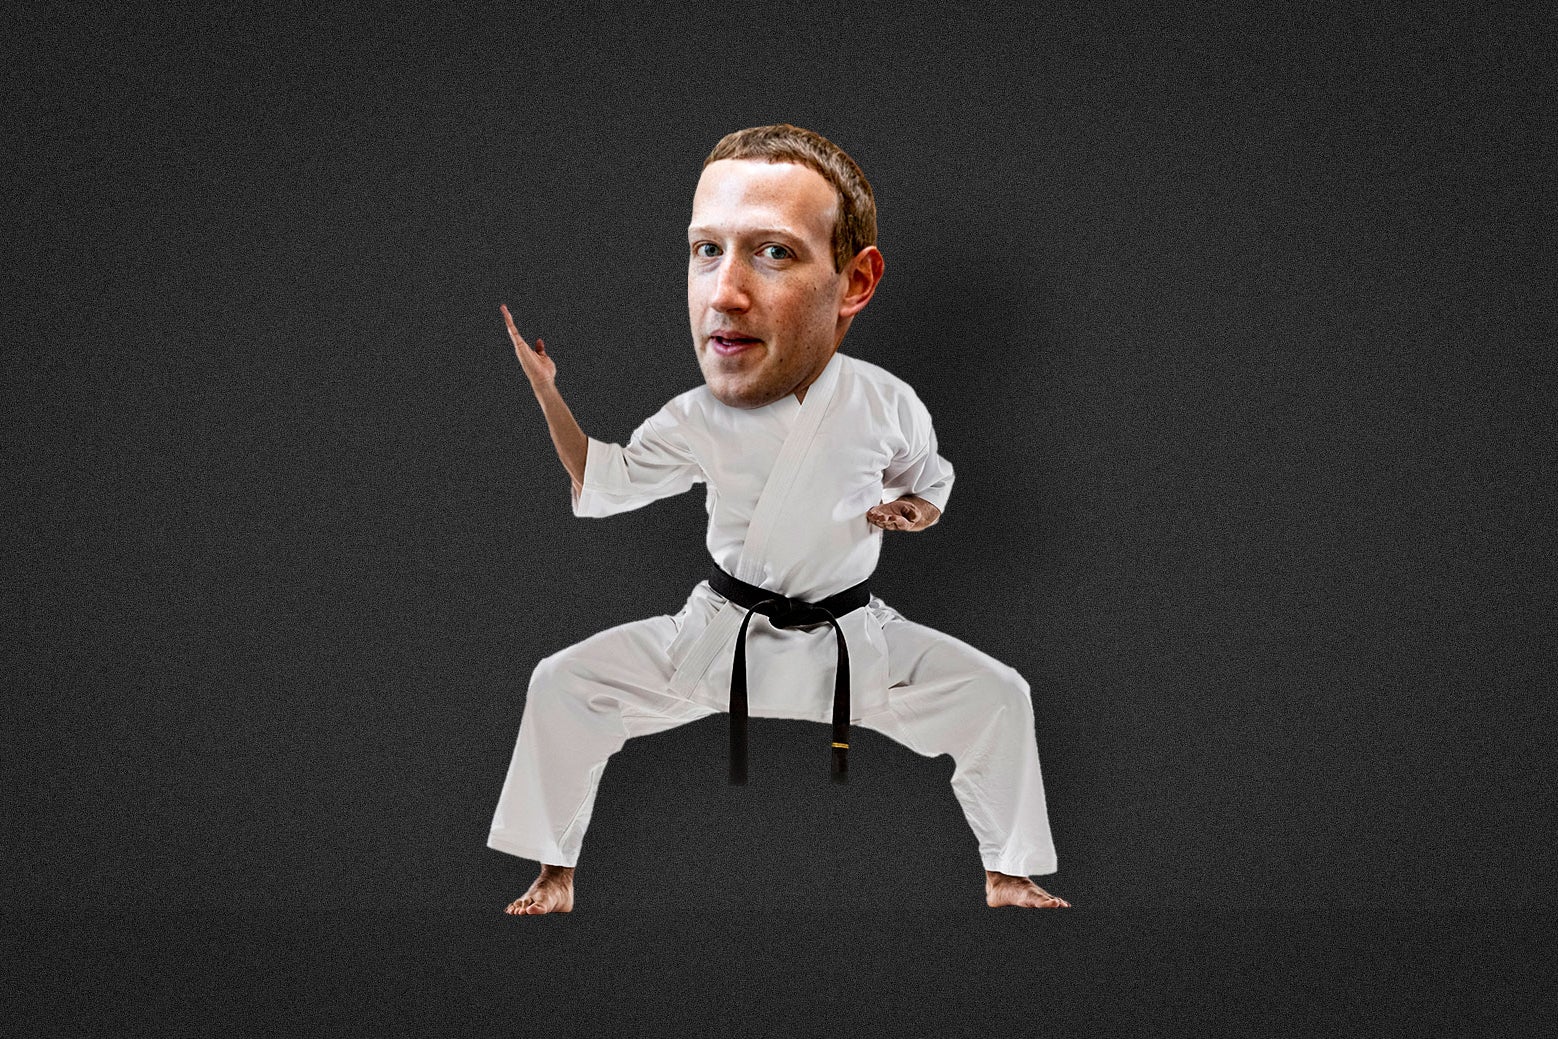 Mark Zuckerberg on jiujitsu start: I got beaten up a lot